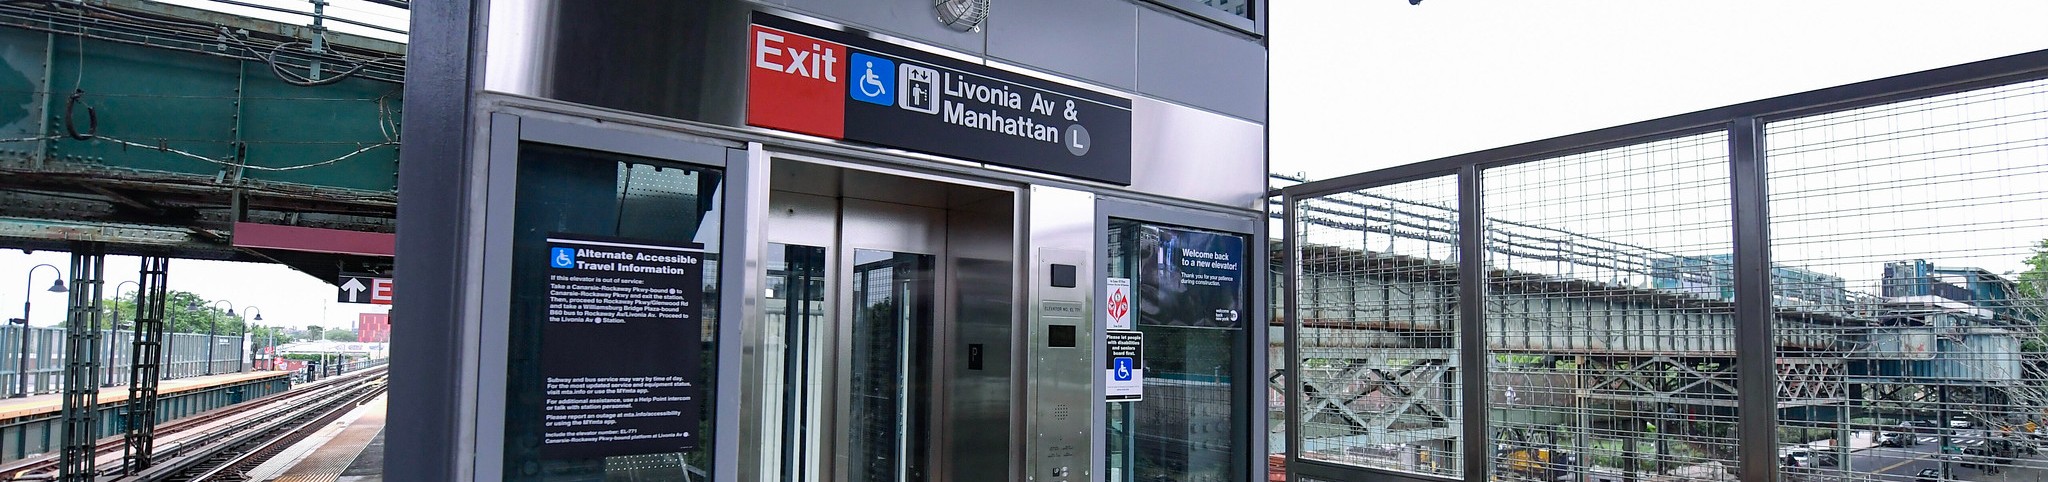 An elevator at a subway station.